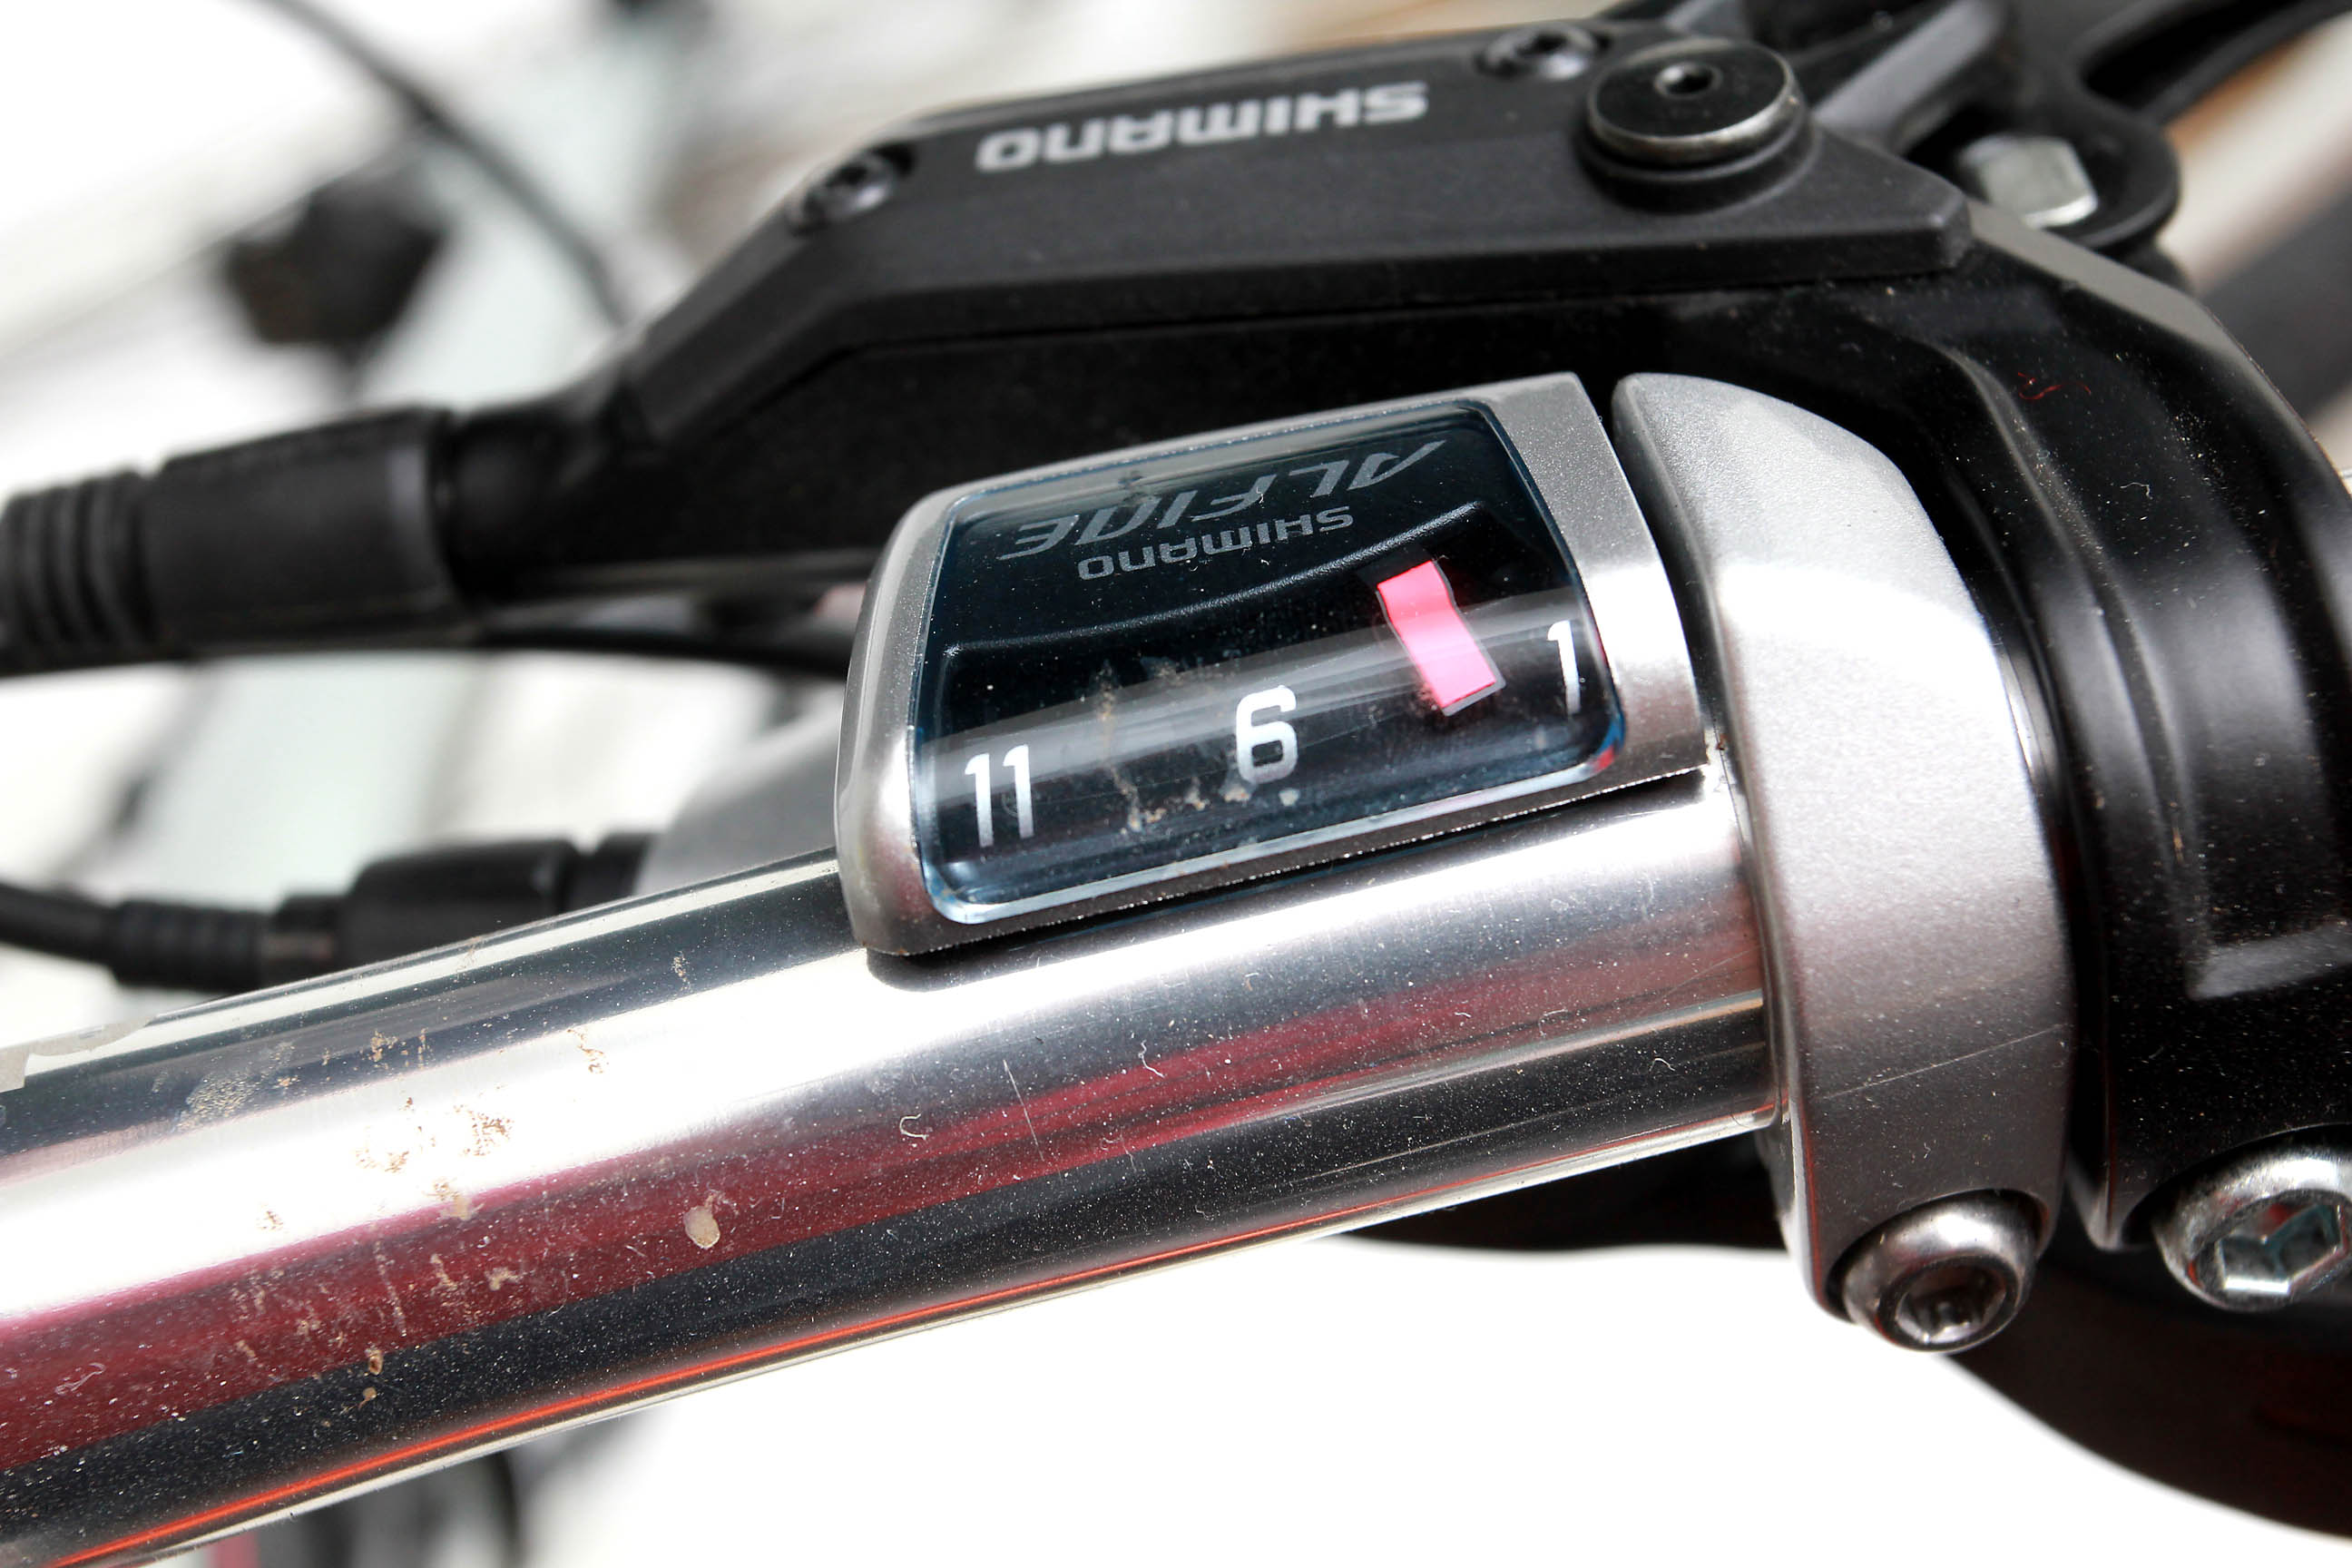 Geaccepteerd Transistor dood Review: Shimano Alfine 11 hub gear and shifter | road.cc